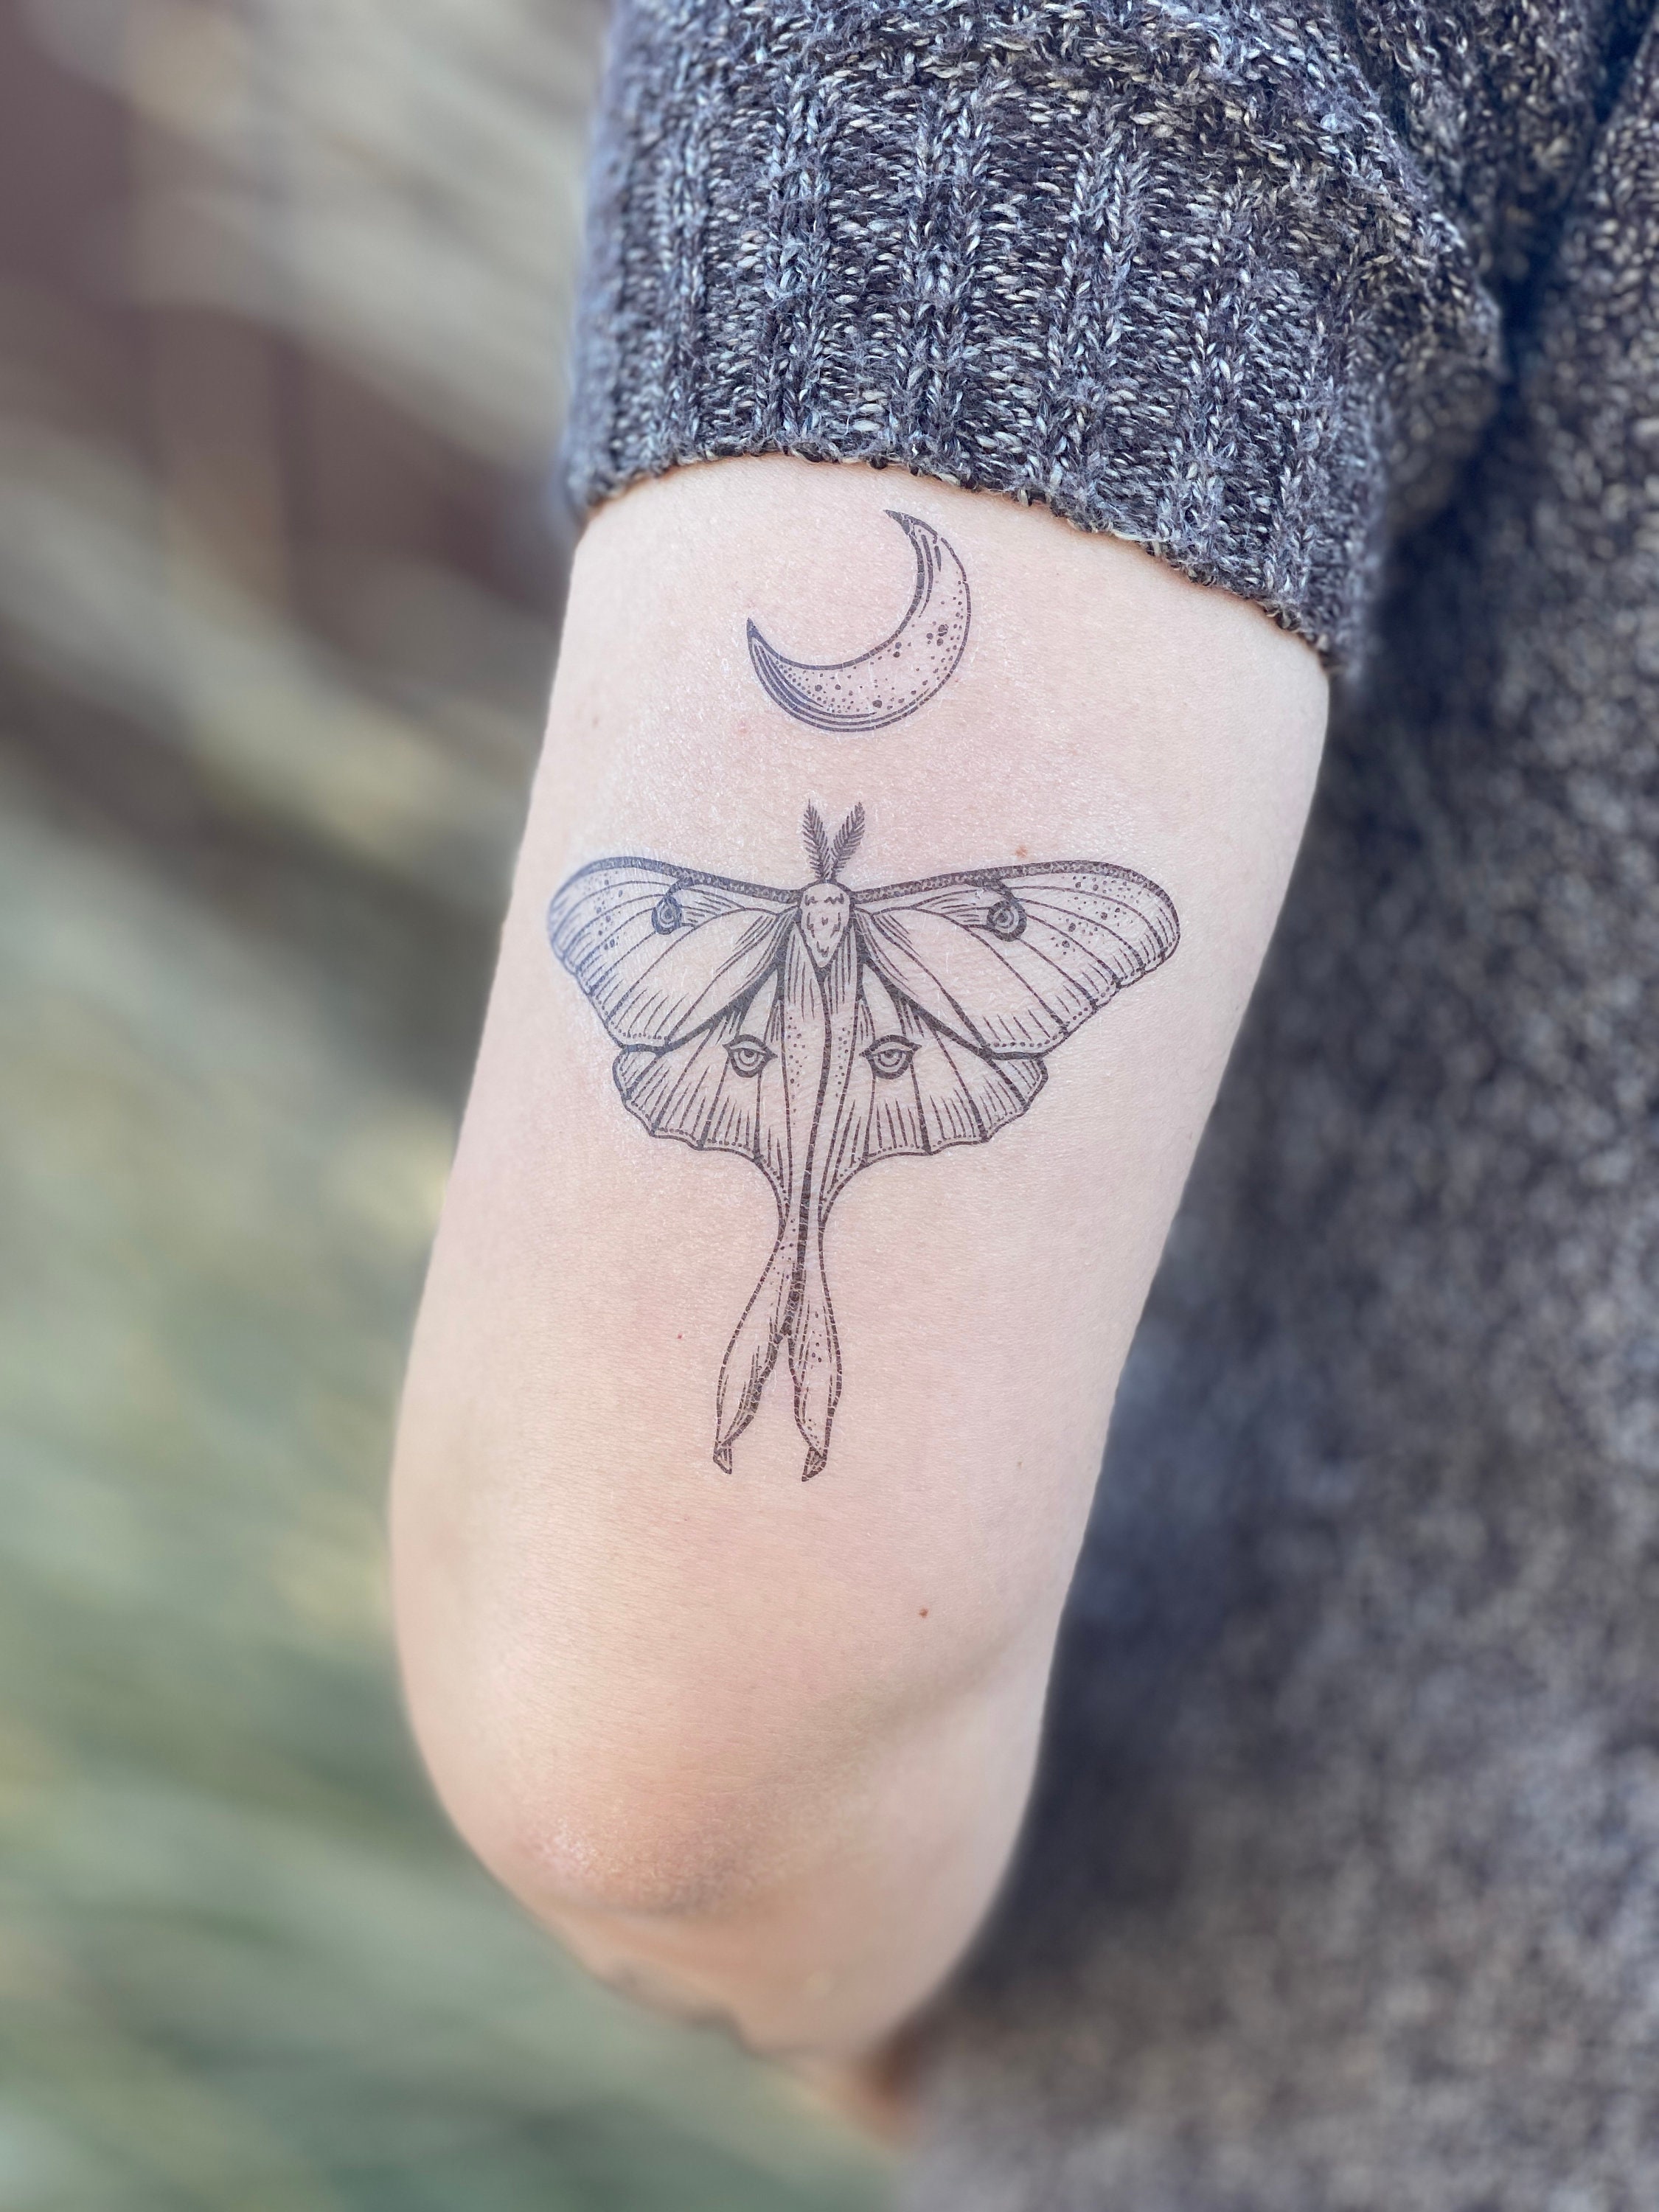 Top 45 Best Luna Moth Tattoo Ideas  2021 Inspiration Guide